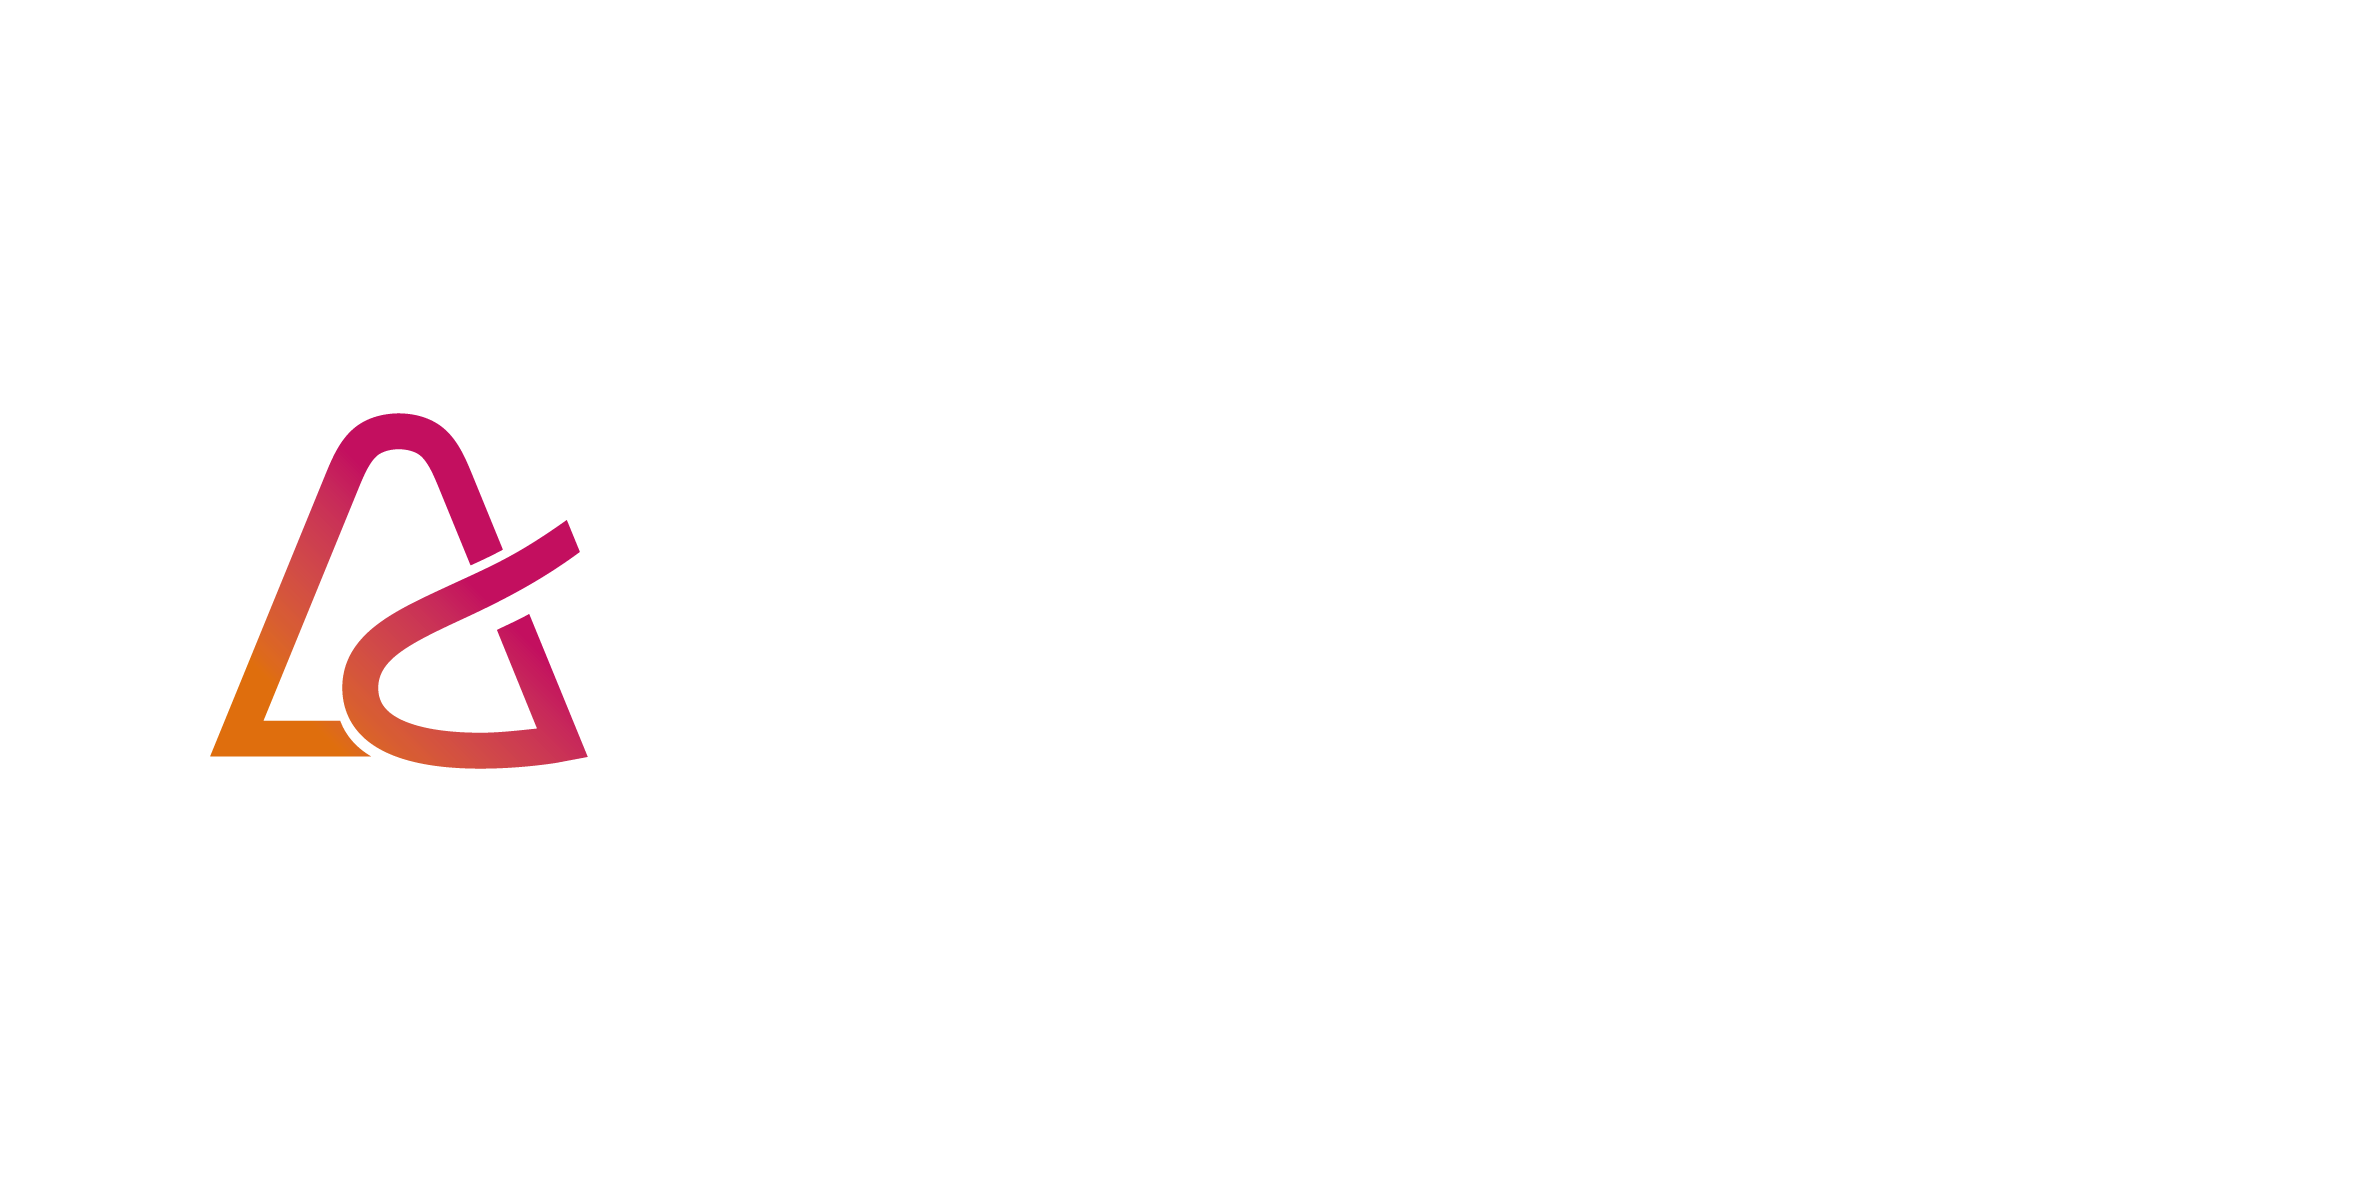 University college algebra